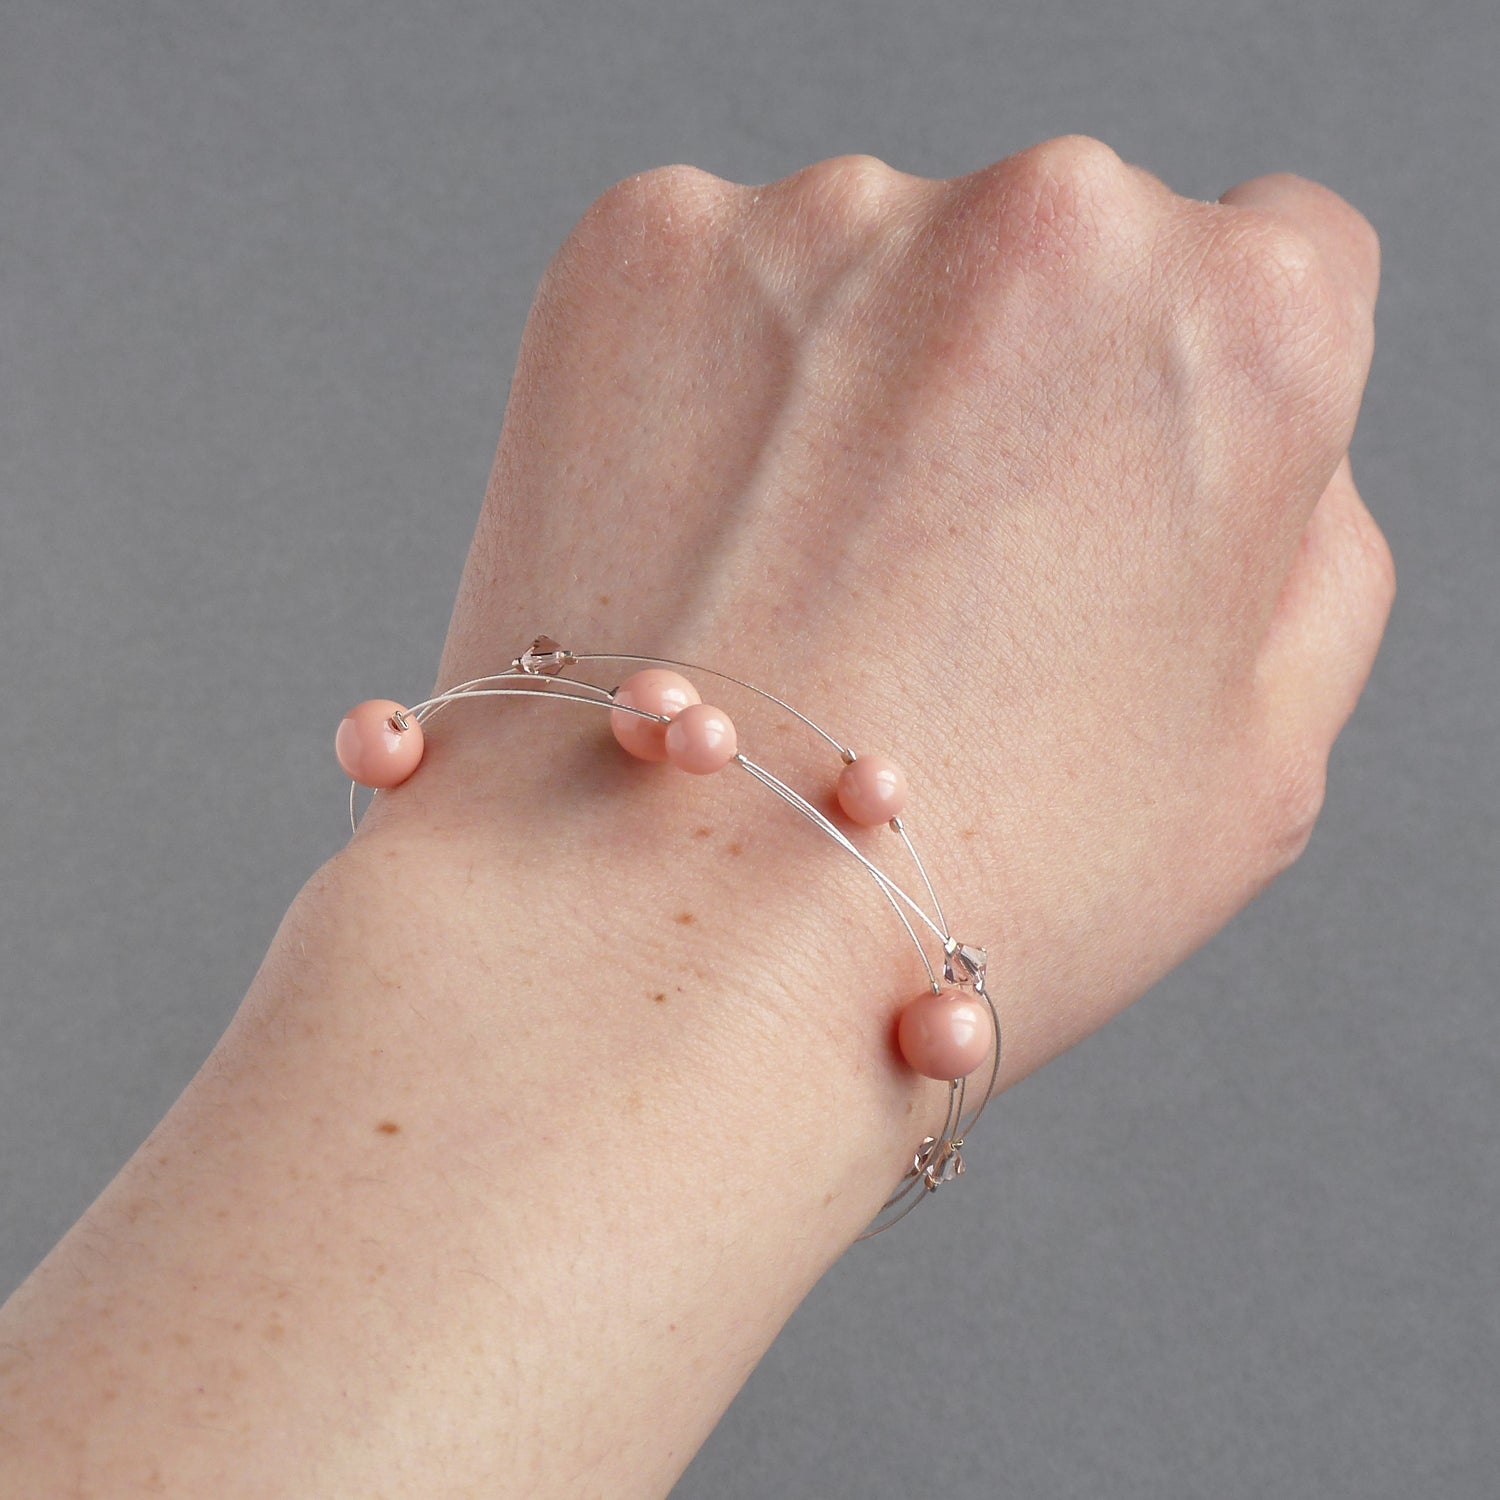 Coral pink bridesmaids bracelets